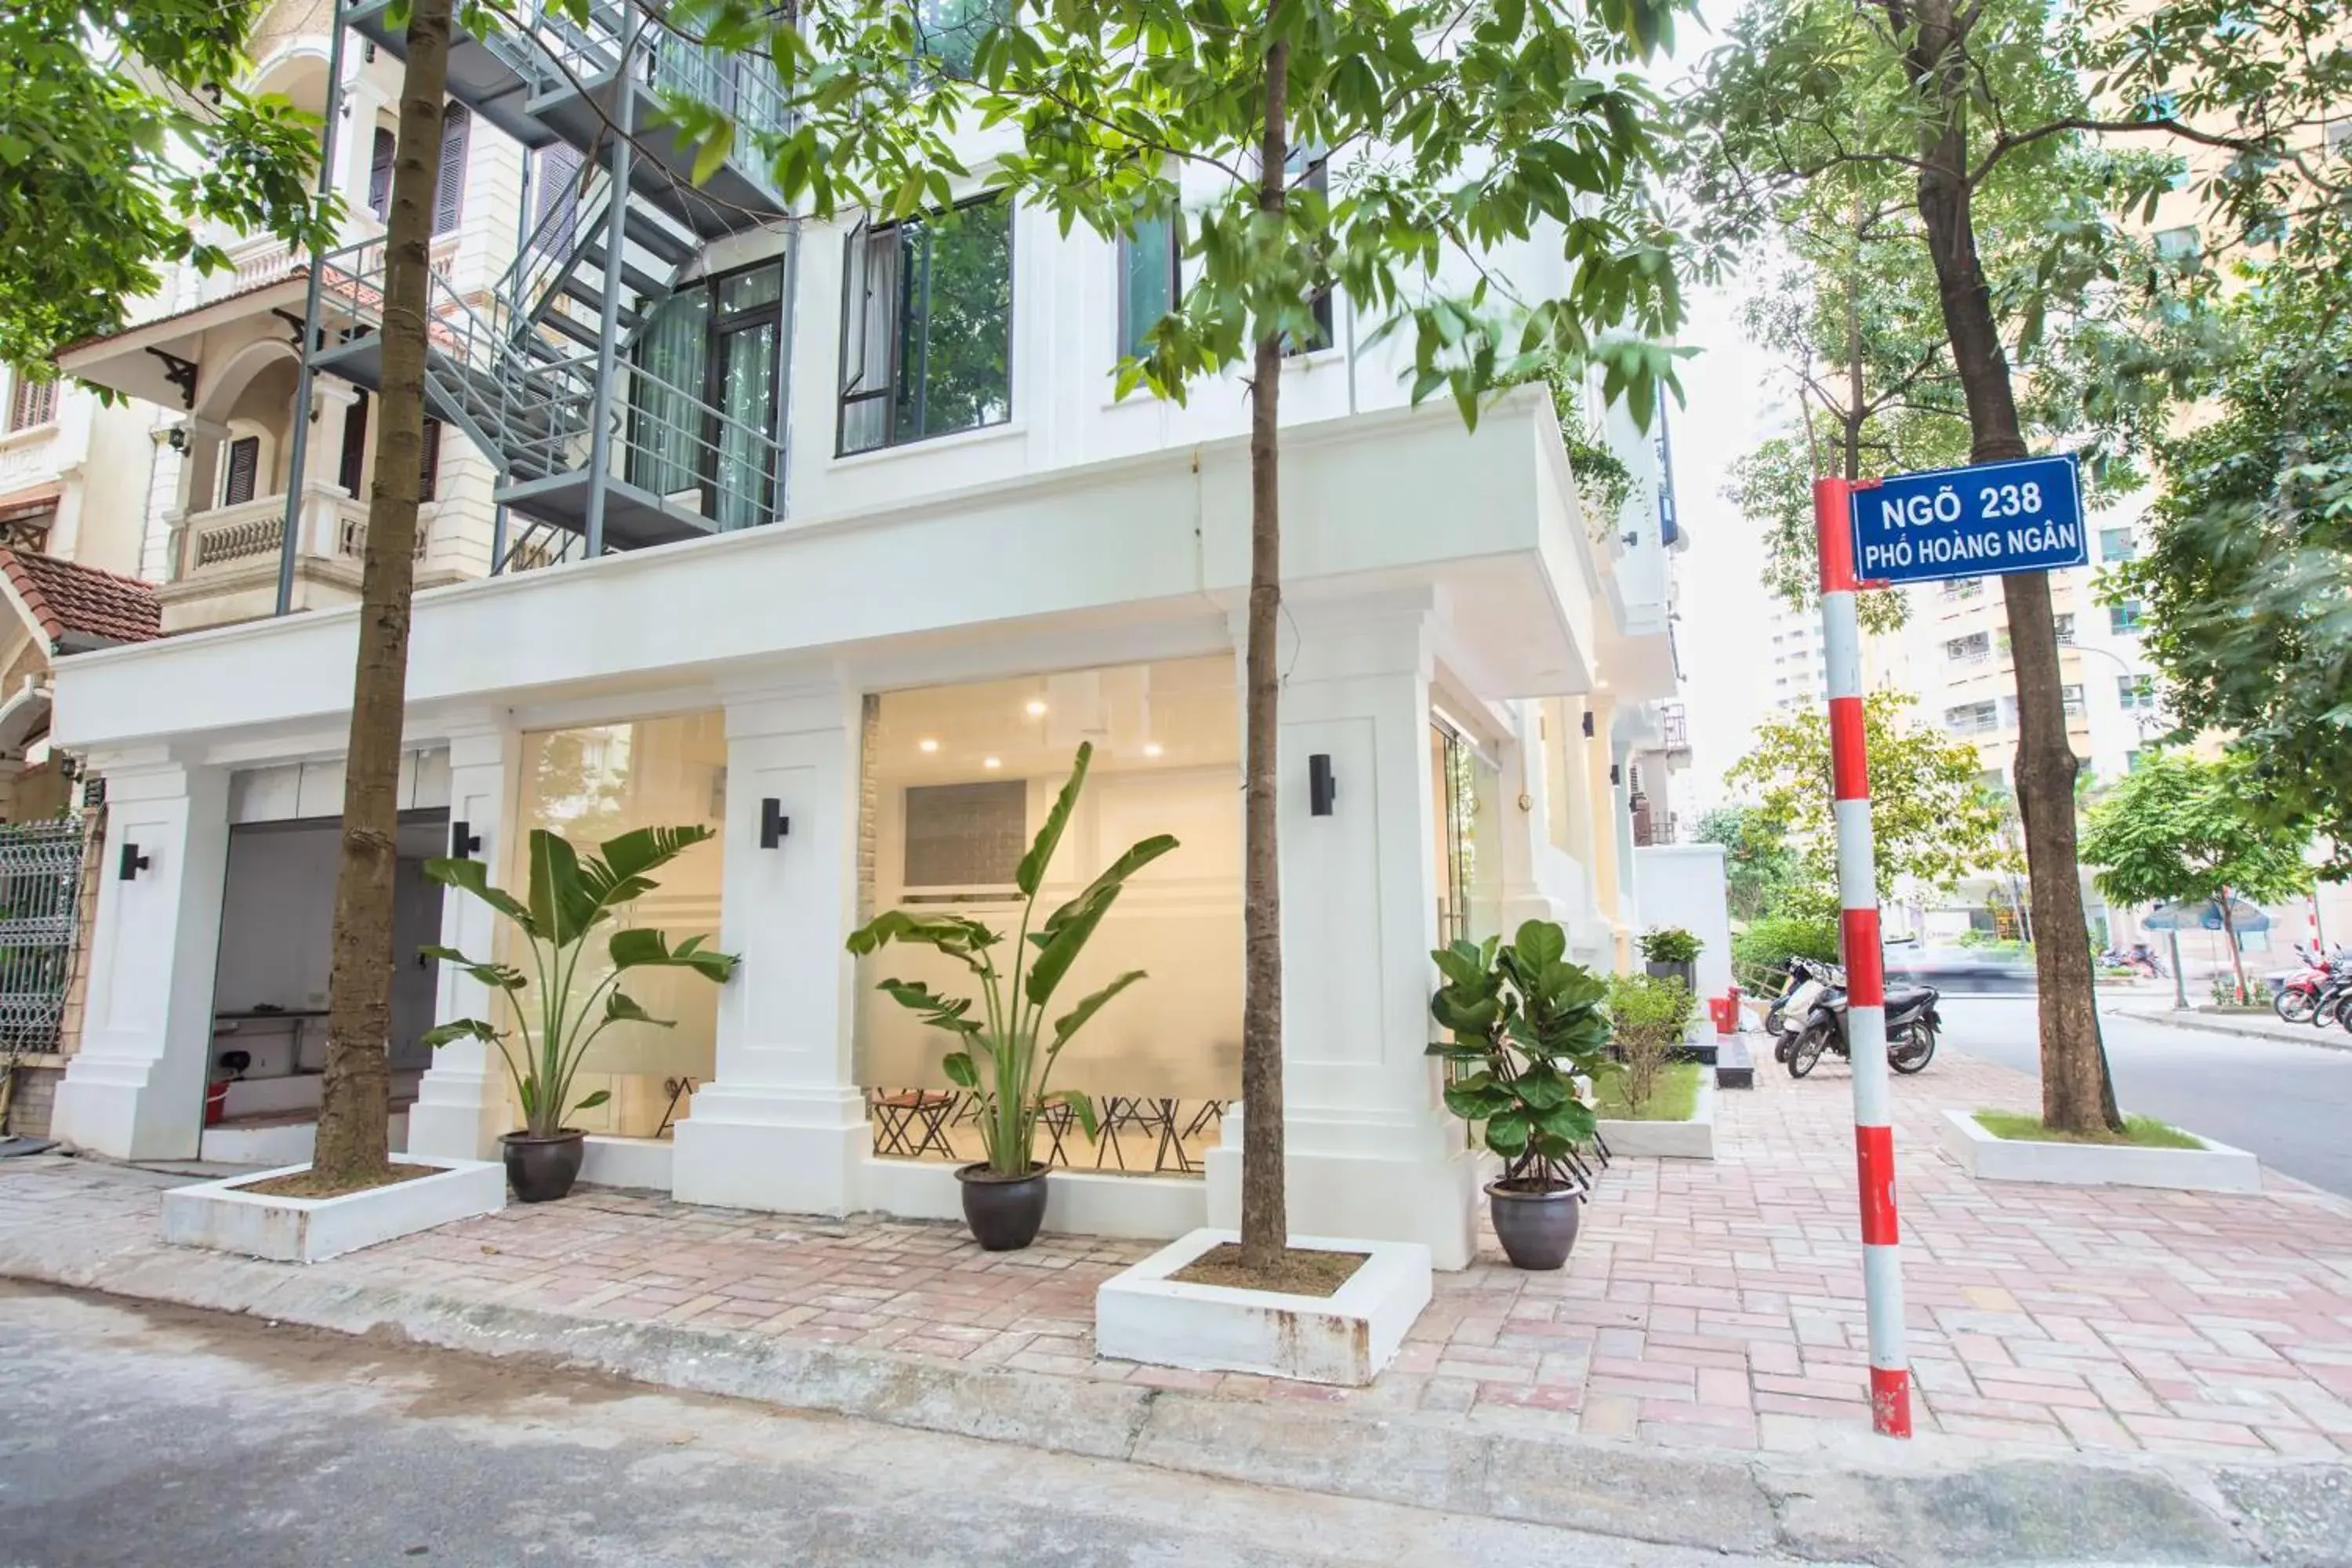 Nearby landmark in Dinh Ami Hanoi Hotel